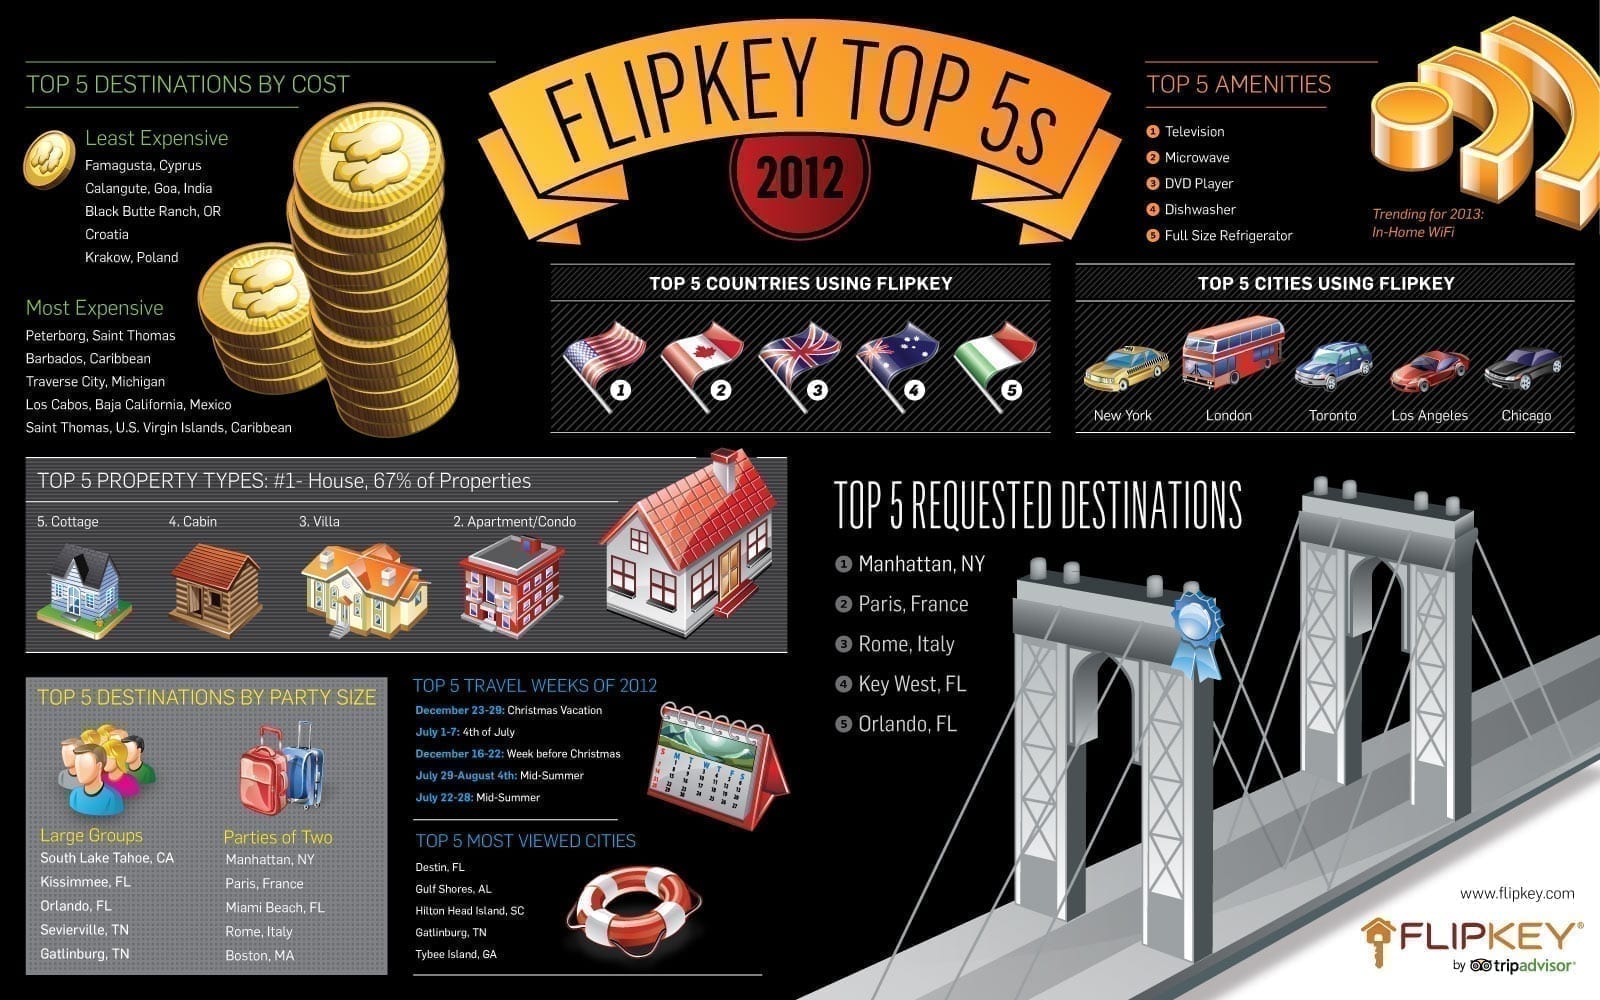 FlipKey's Travel Predictions for 2013